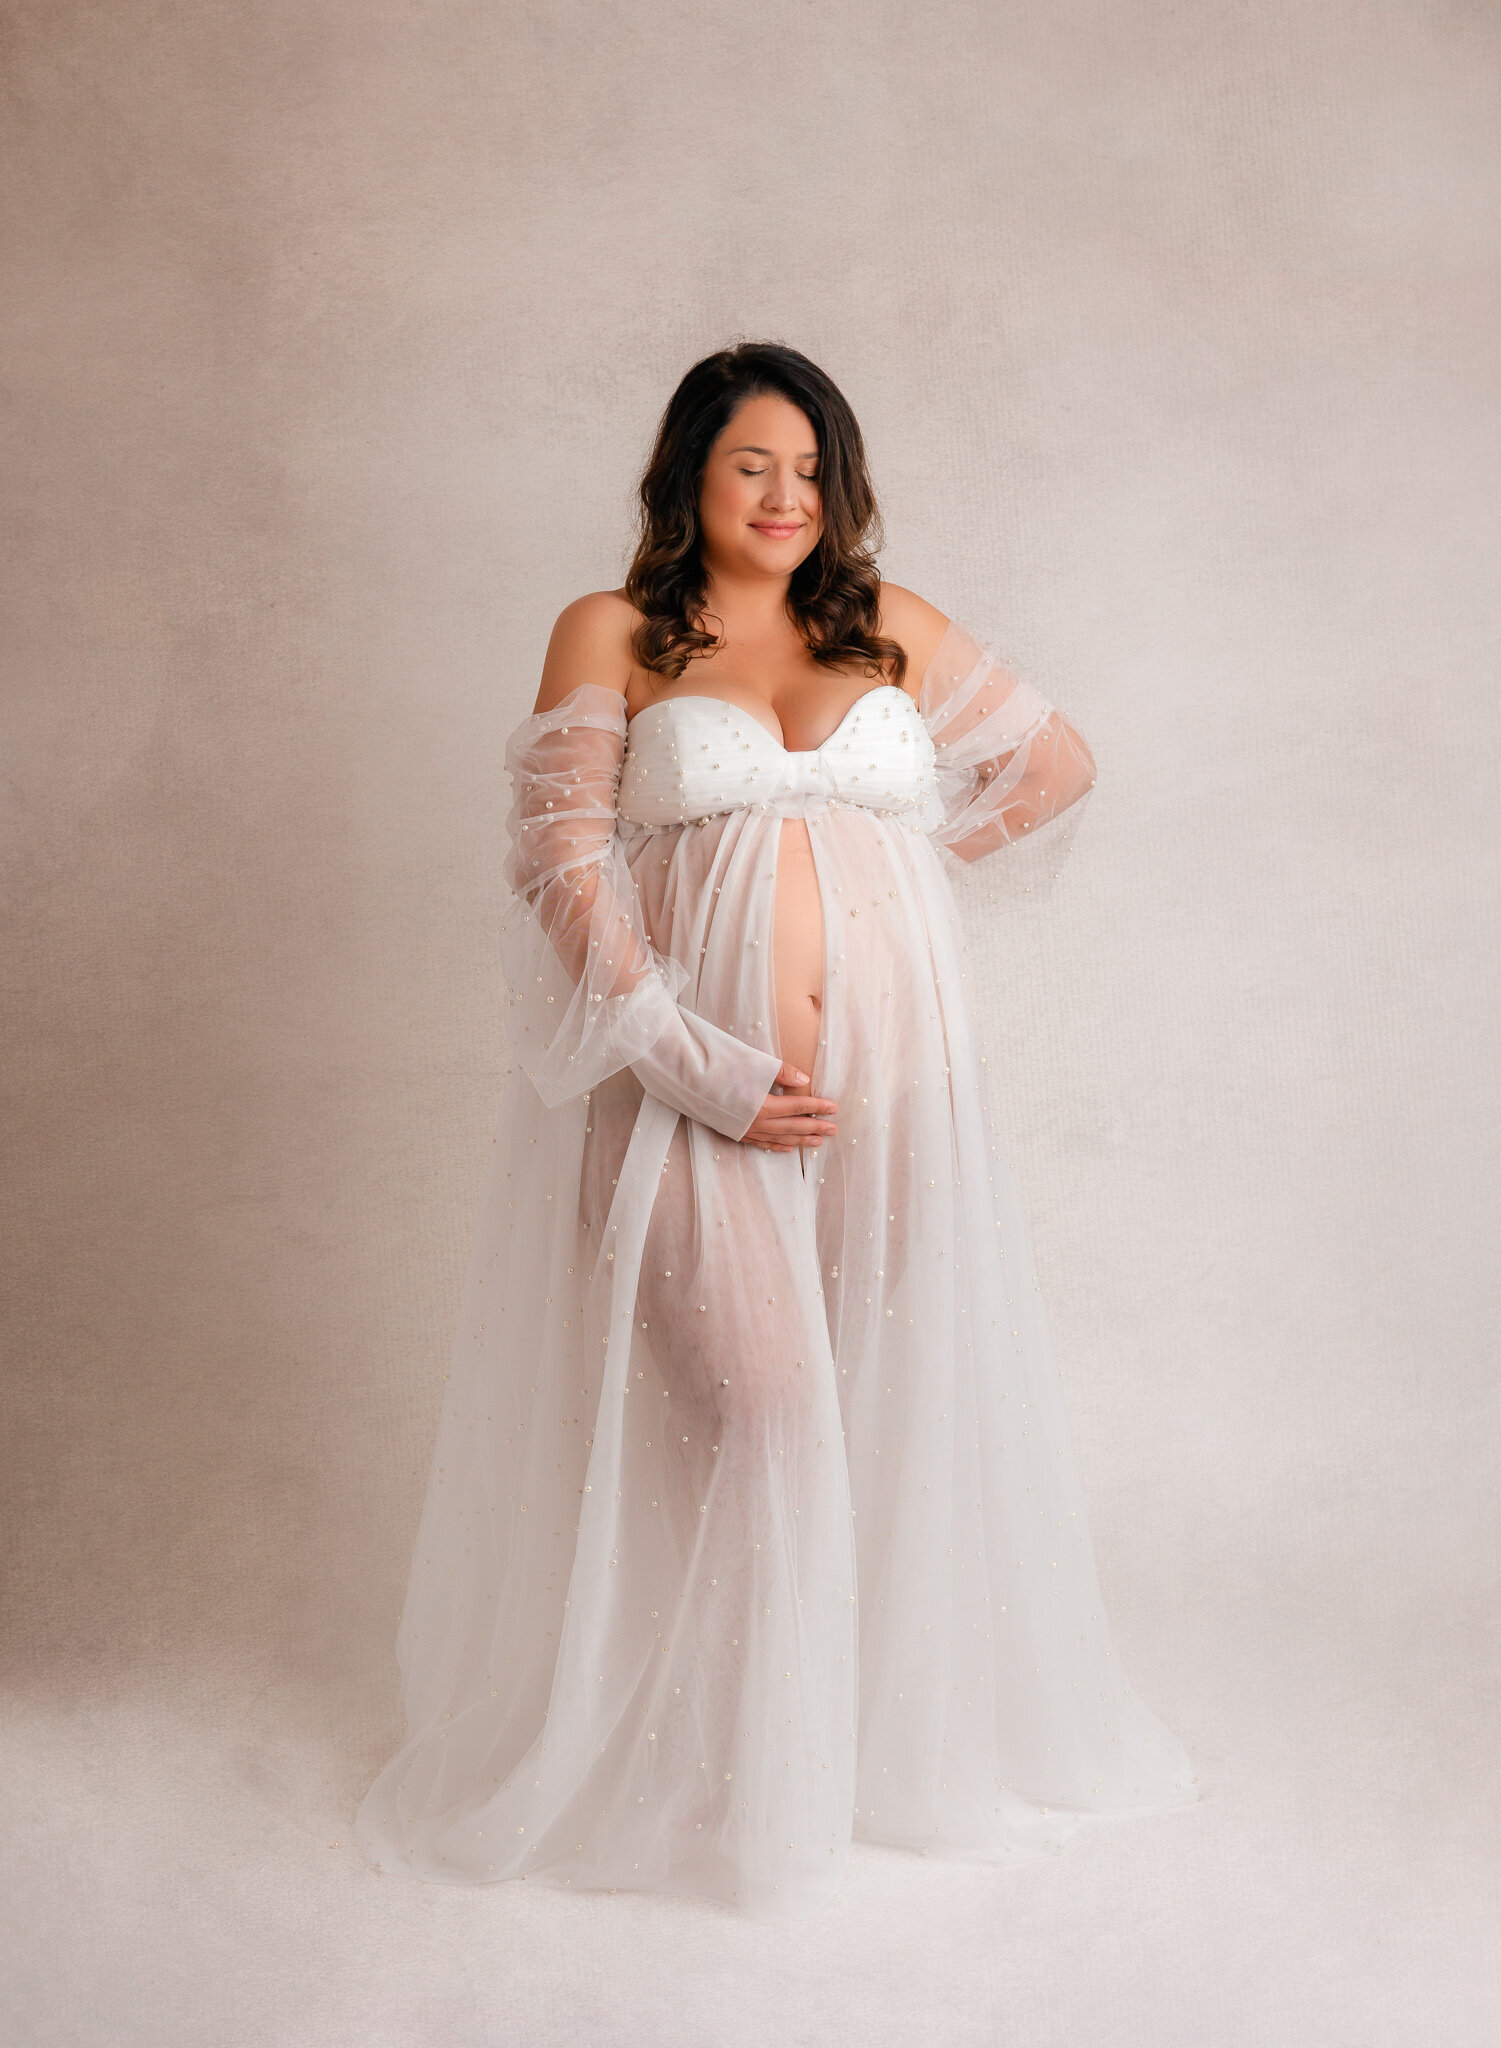 Savannah-Maternity-Photographer-21